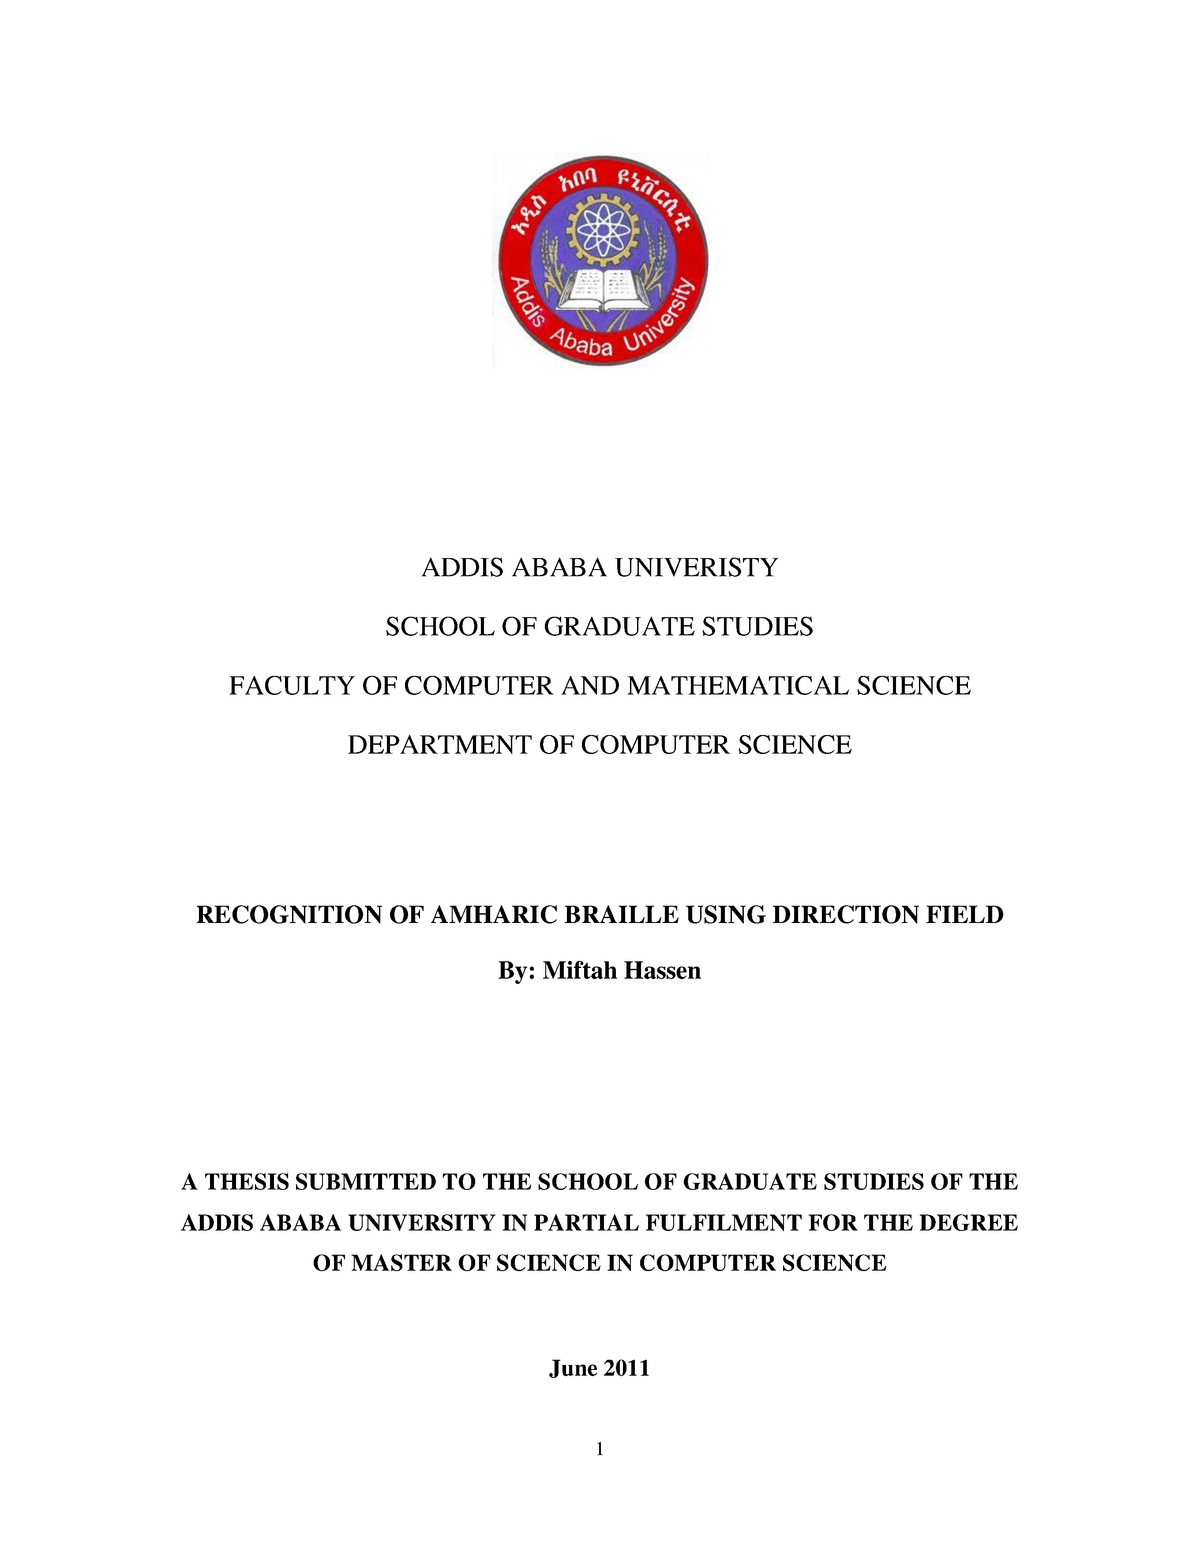 mba thesis in ethiopia pdf